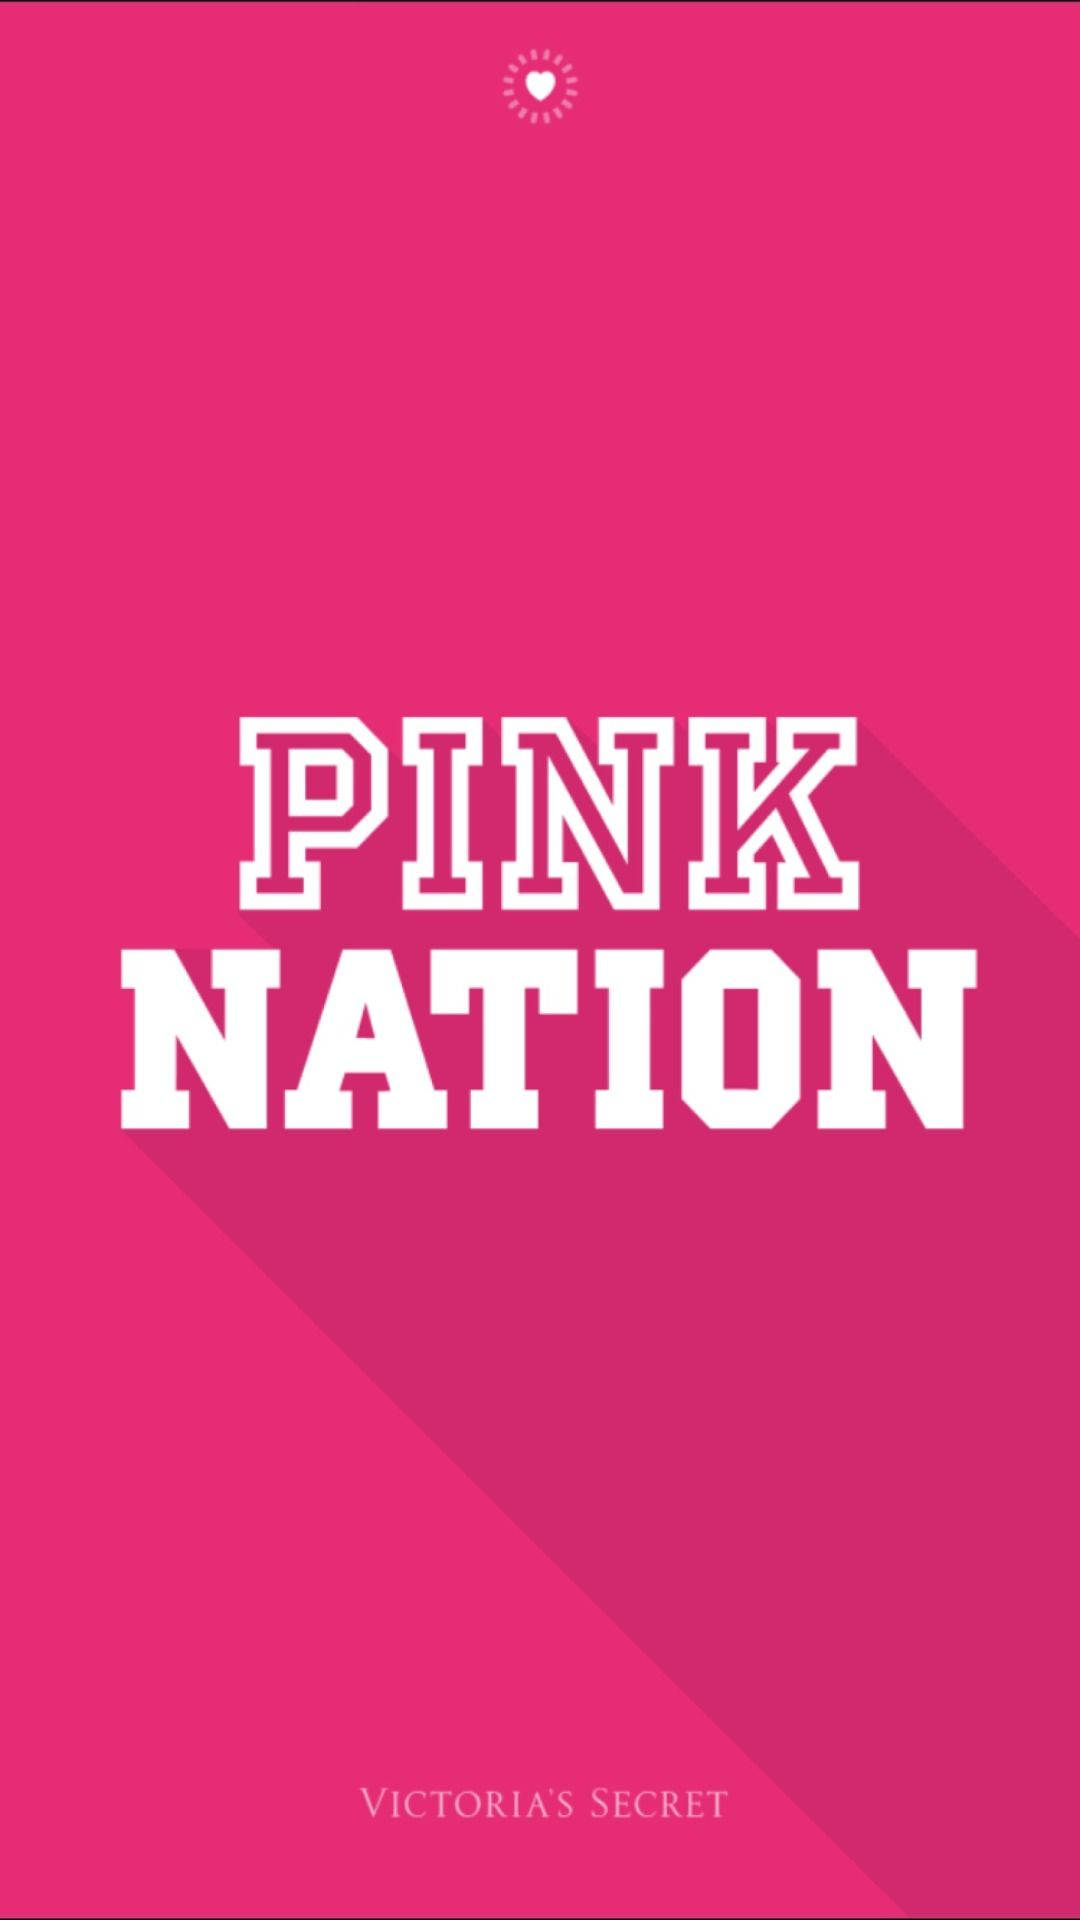 Captivating Victoria Secret Pink Nation Collection